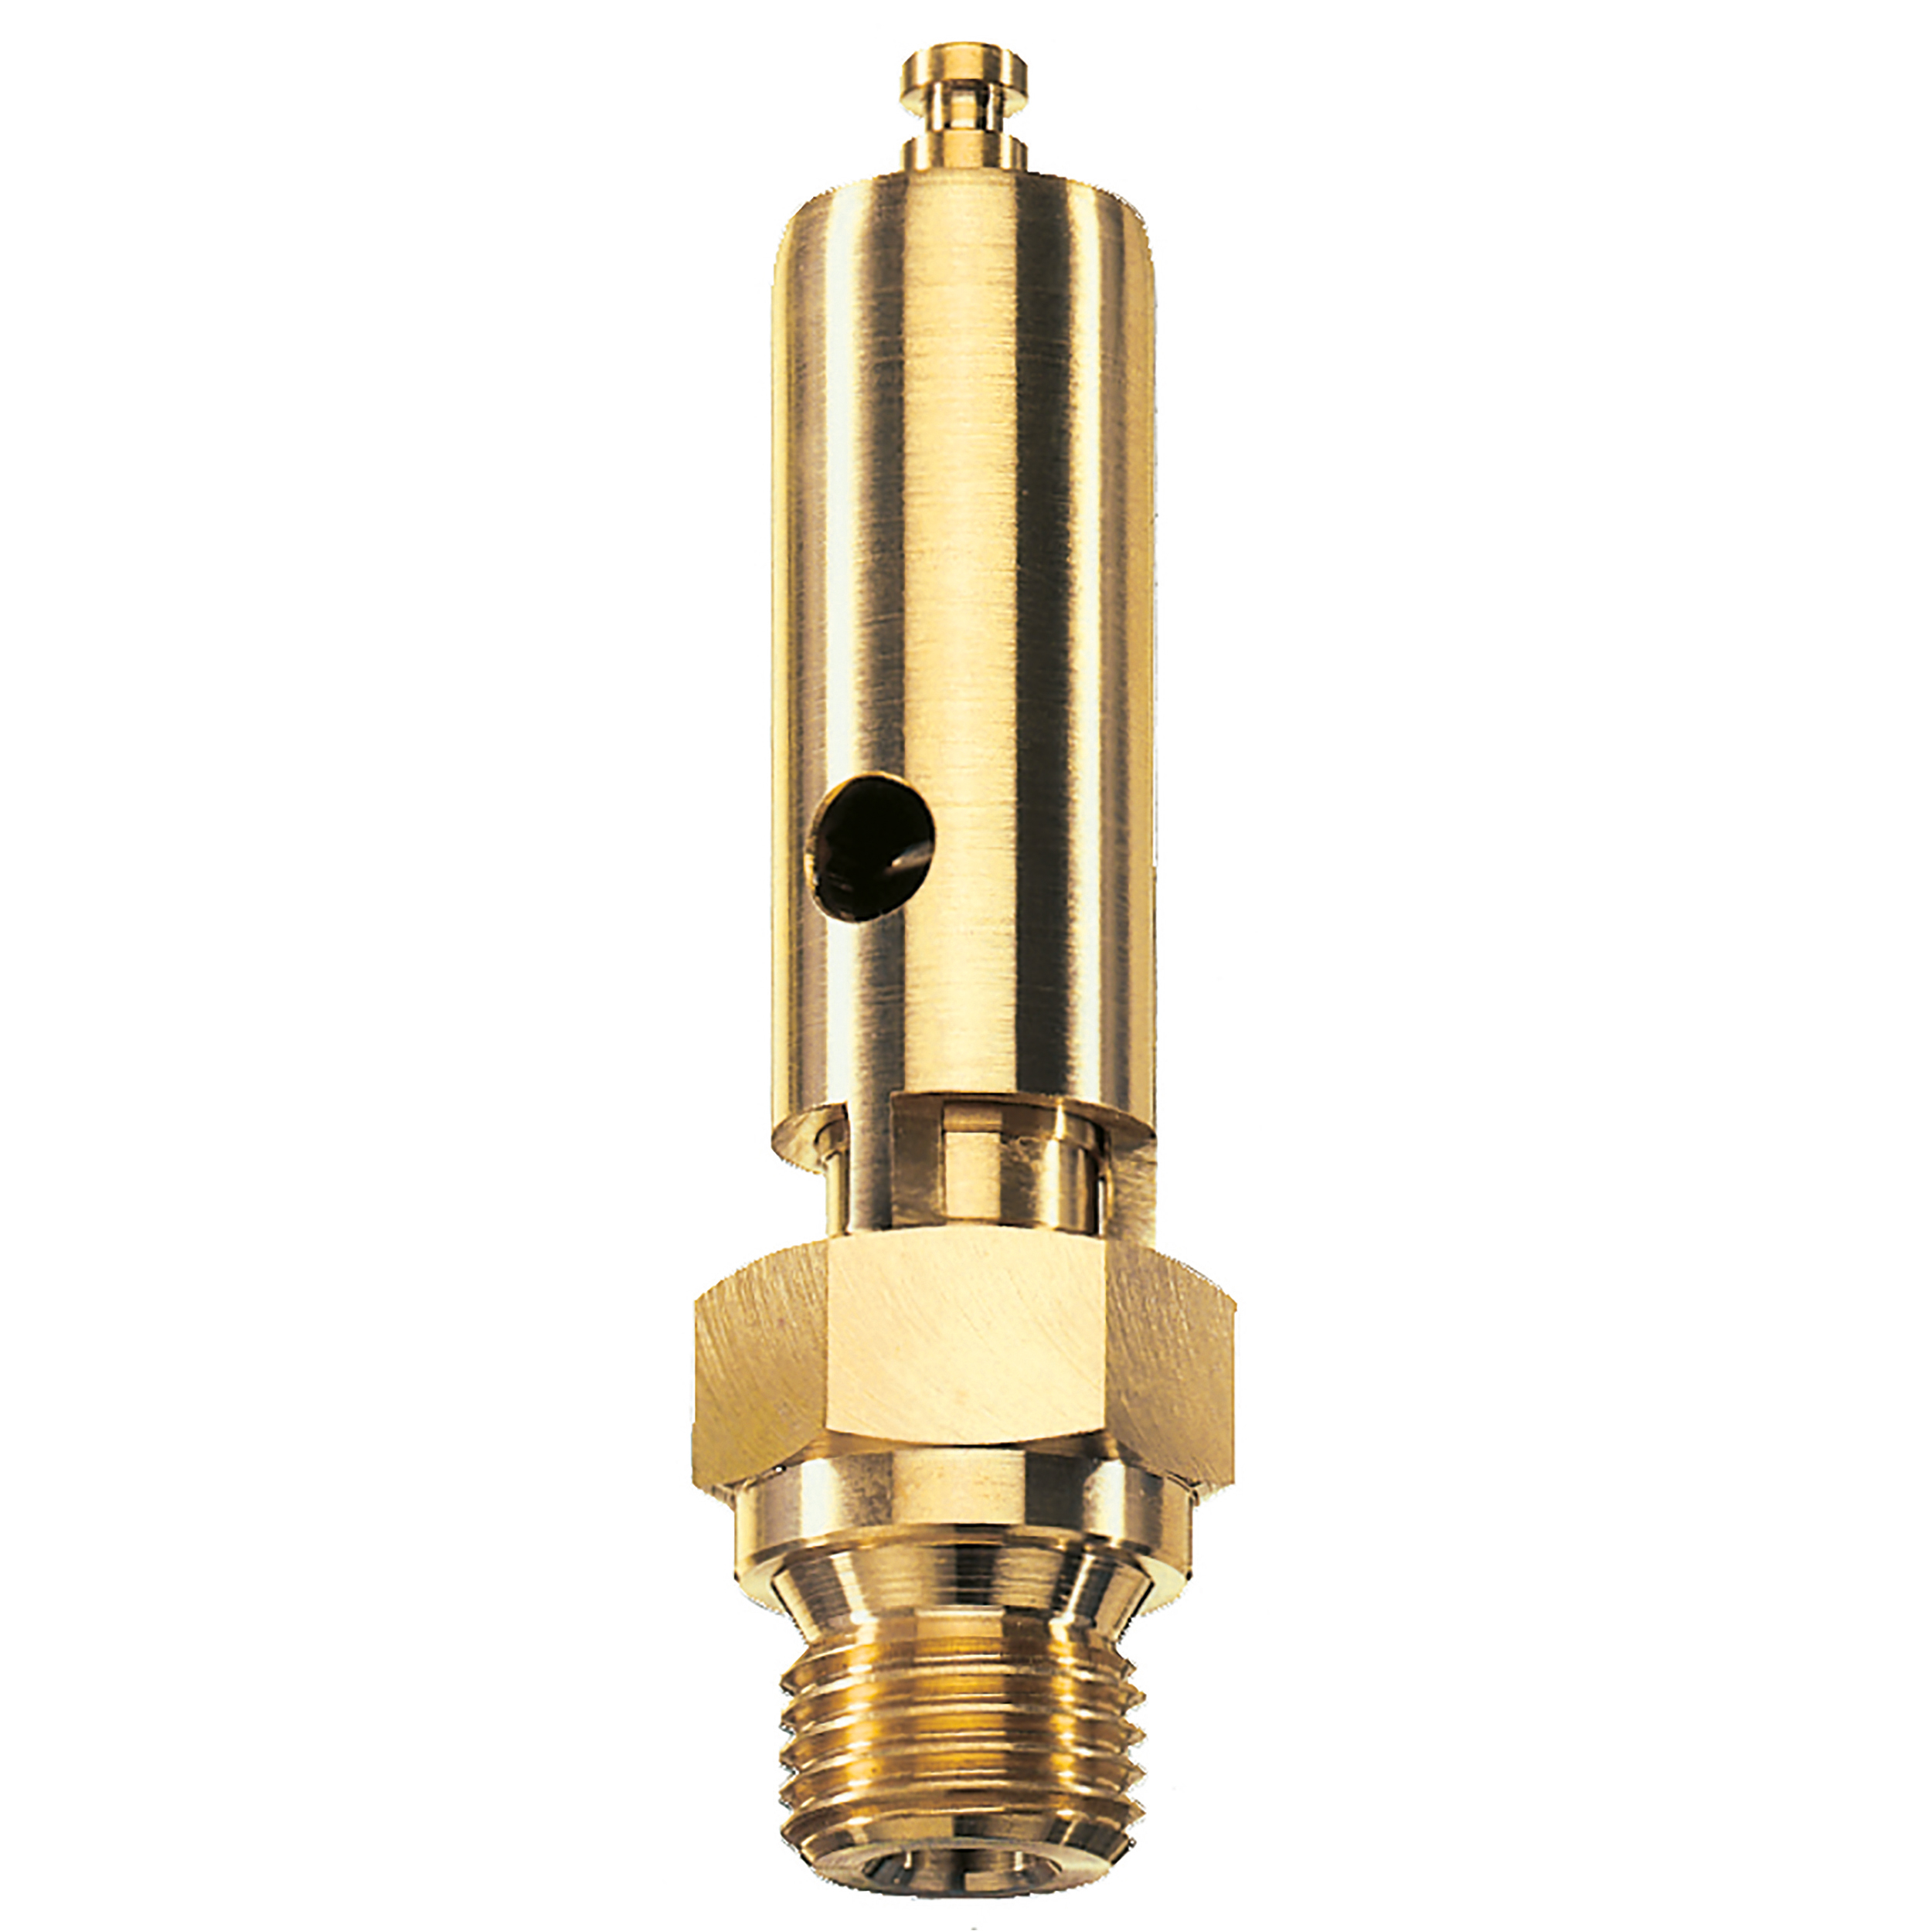 Component-tested safety valve DN 6, G¼, pressure: 13.1-18 bar